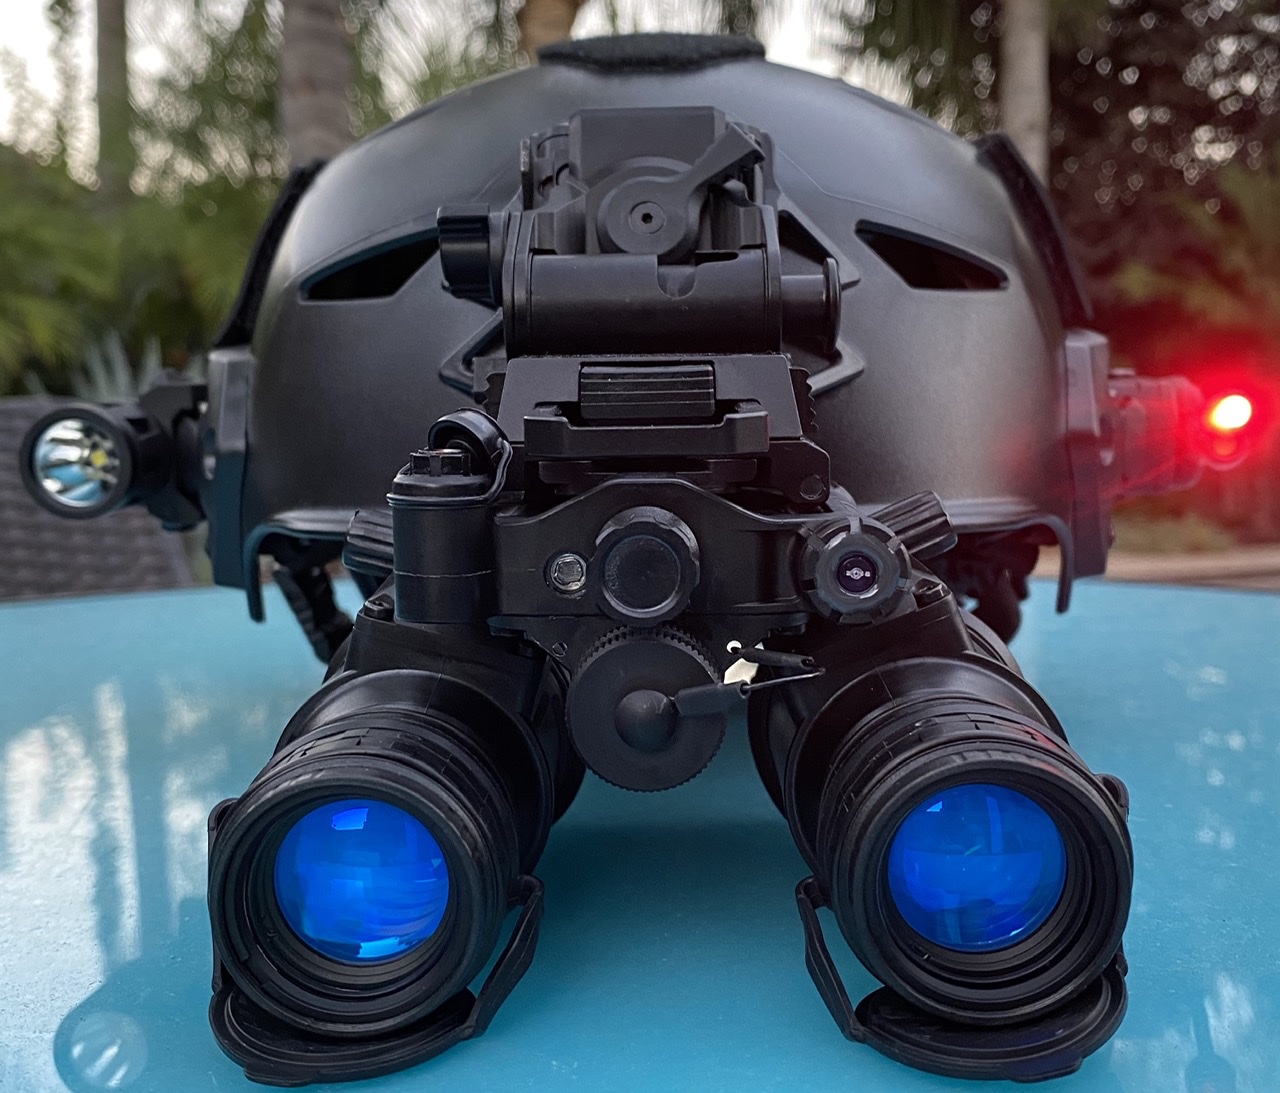 PVS-14 Gen3 Night Vision Goggles. Autogated - DECEMBER DISCOUNTS